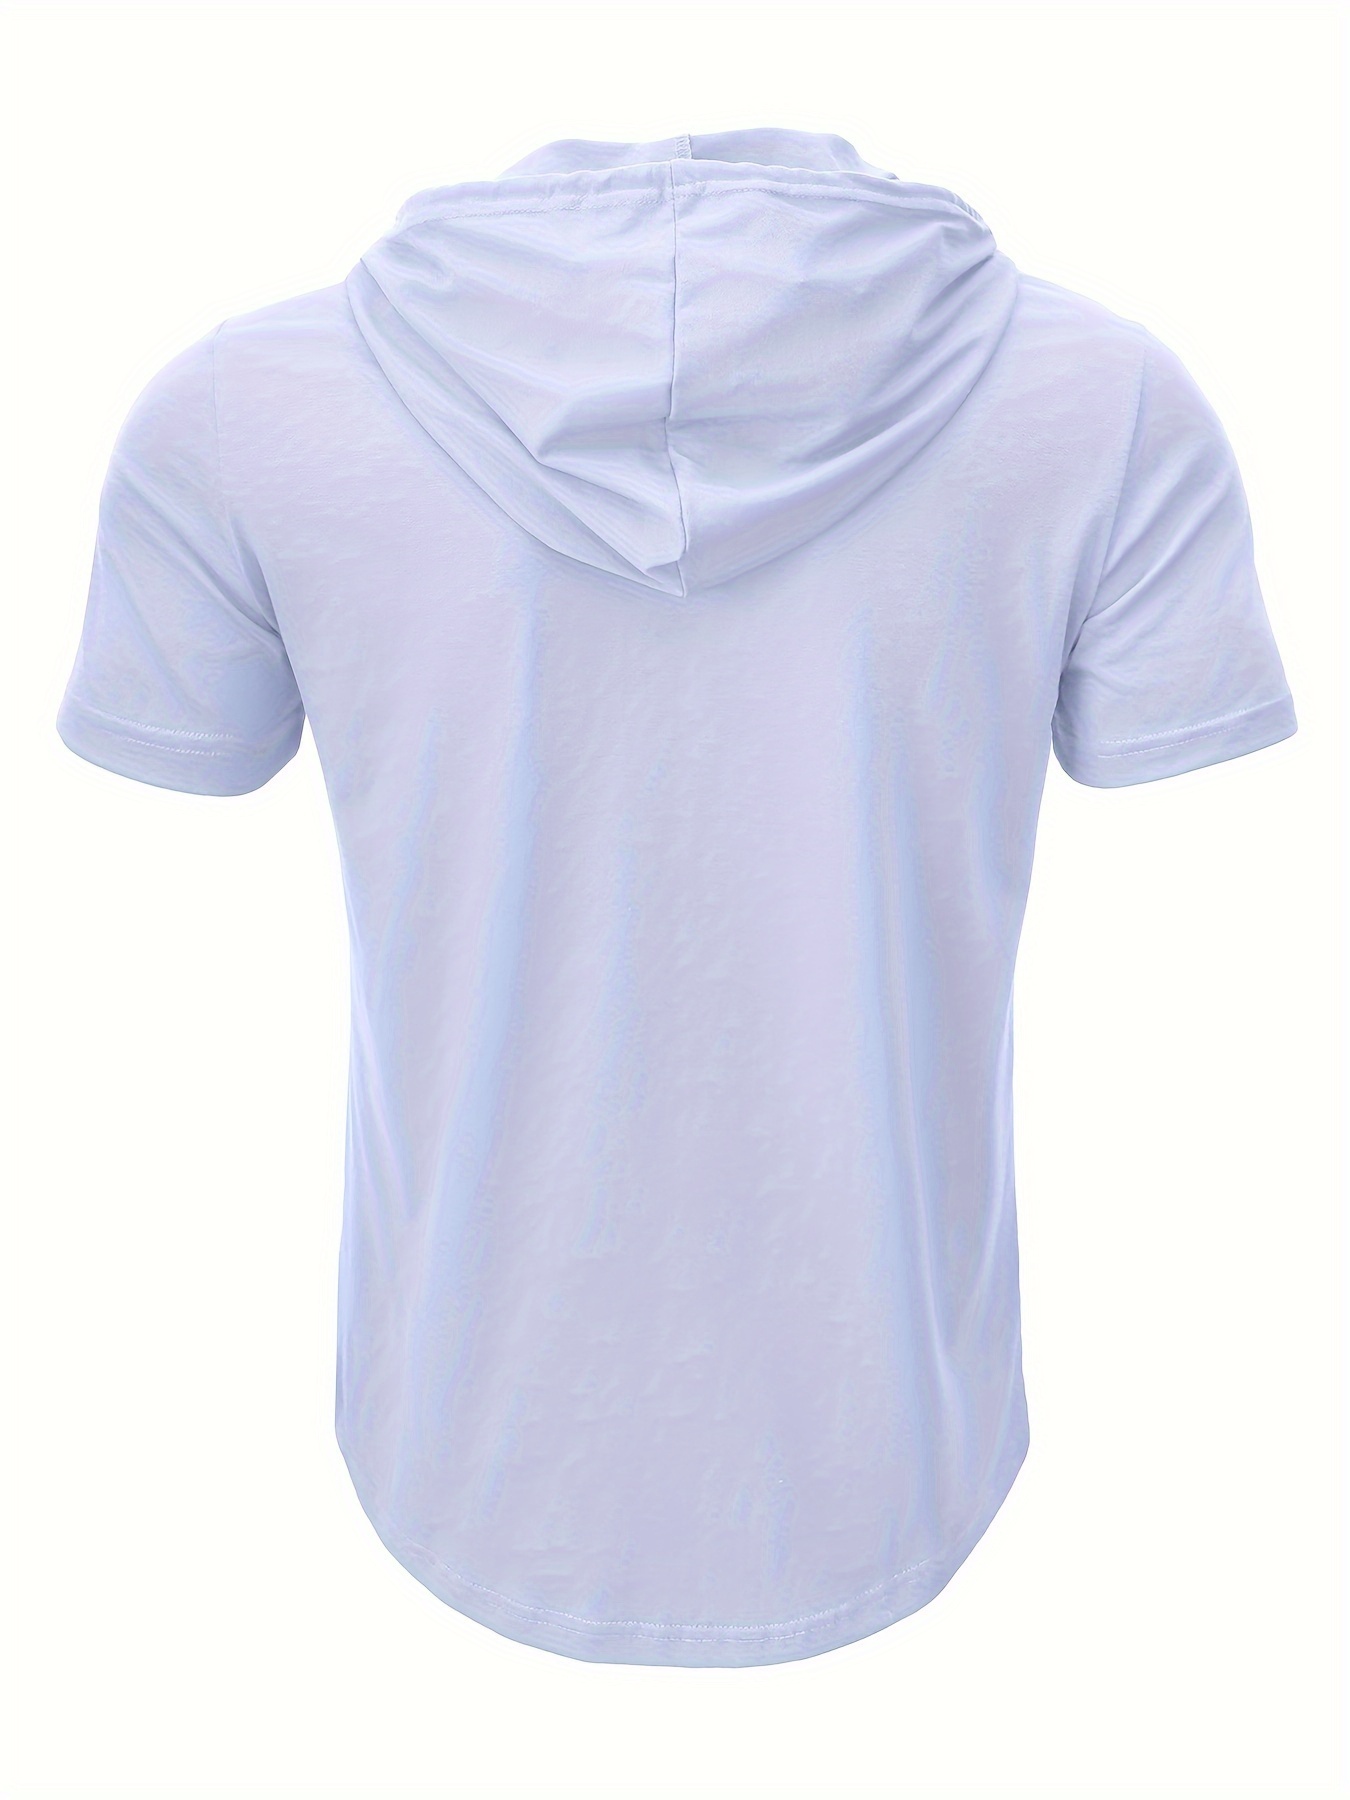 Men’s Solid Drawstring Hooded Short Sleeve Sports T-shirt, Men’s Cotton Blend Henley Top For Summer Outdoor